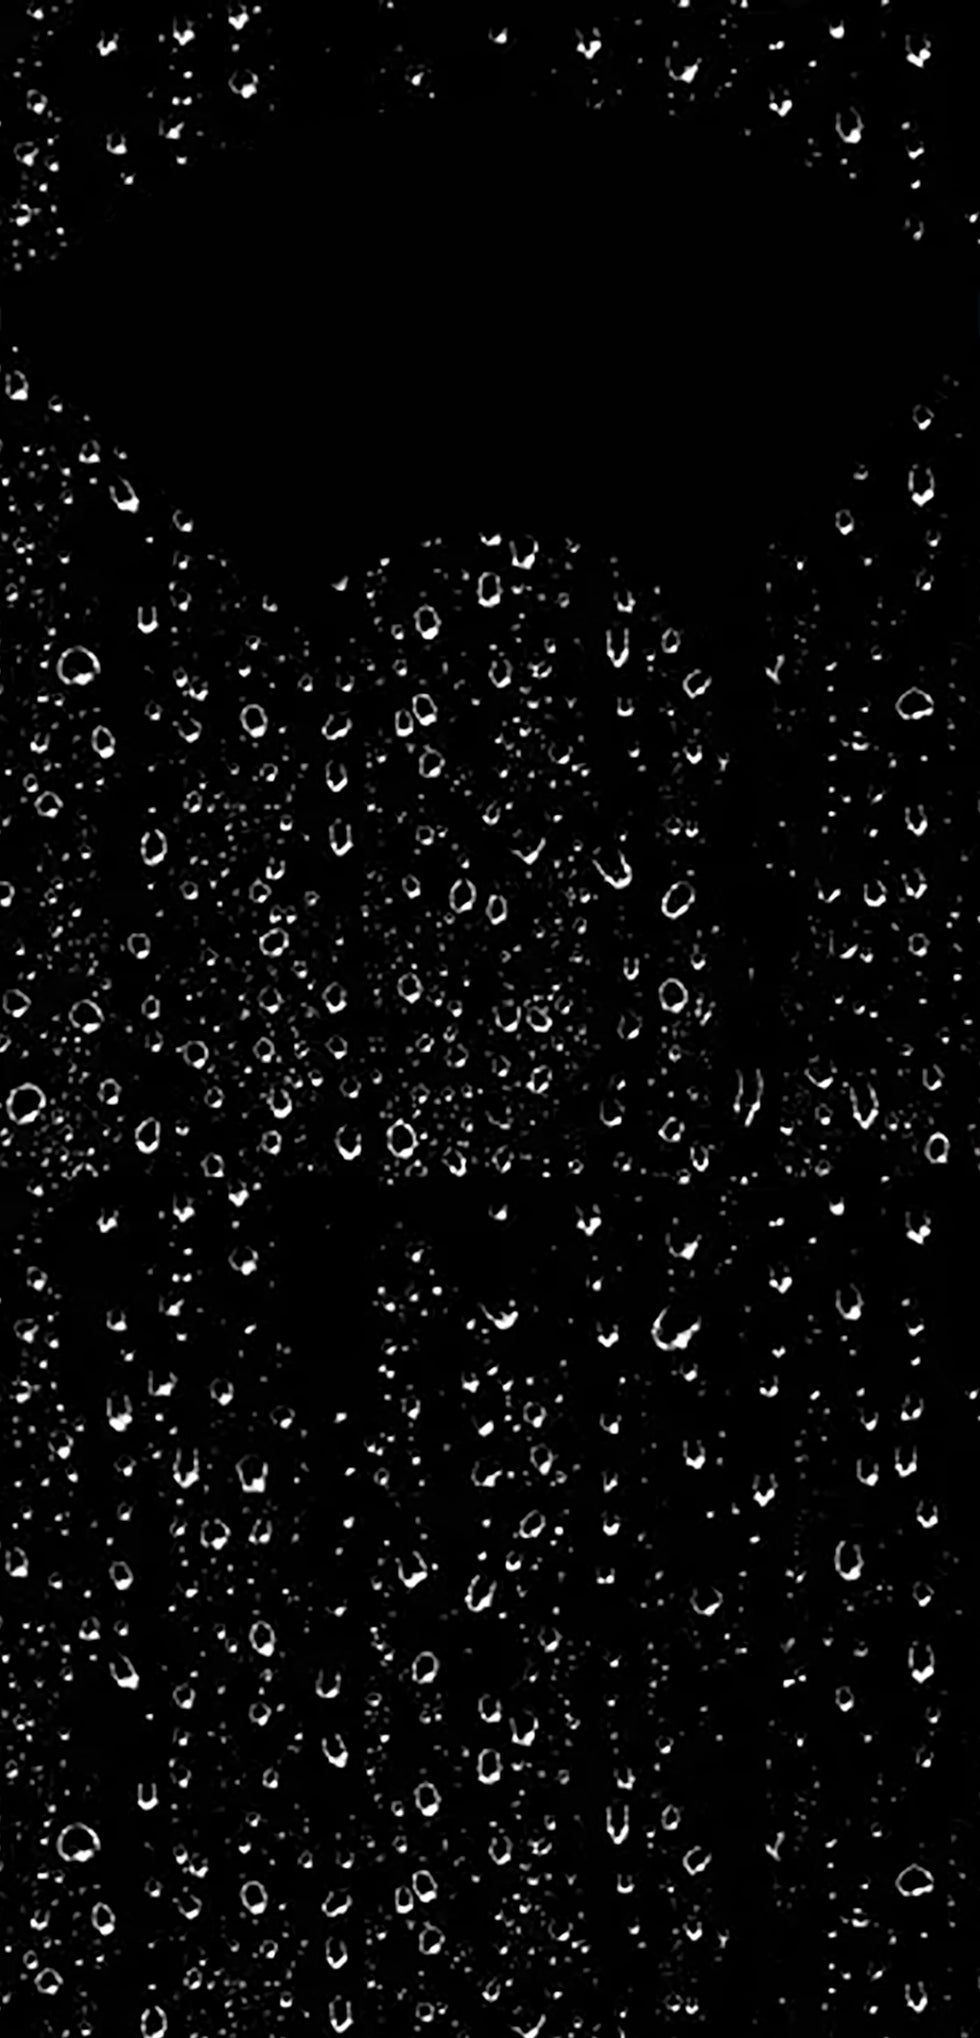 Black Water Drops